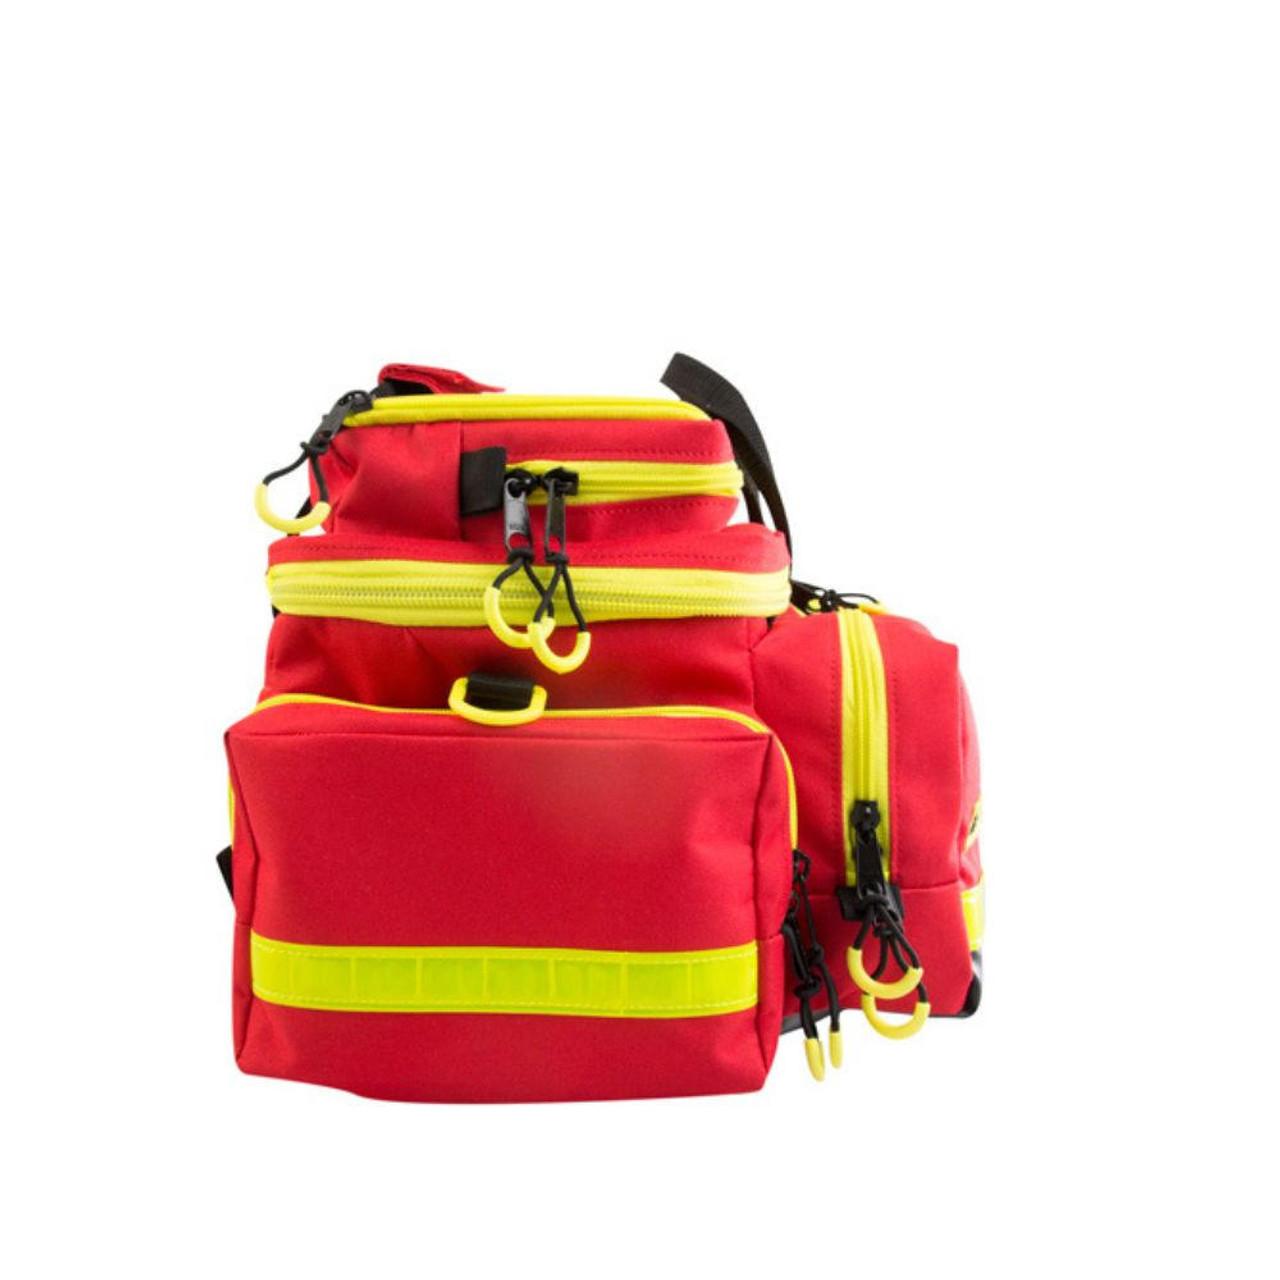 Aerocase Emergency Medical Bag Red Polyester Large 28 Litre Empty 